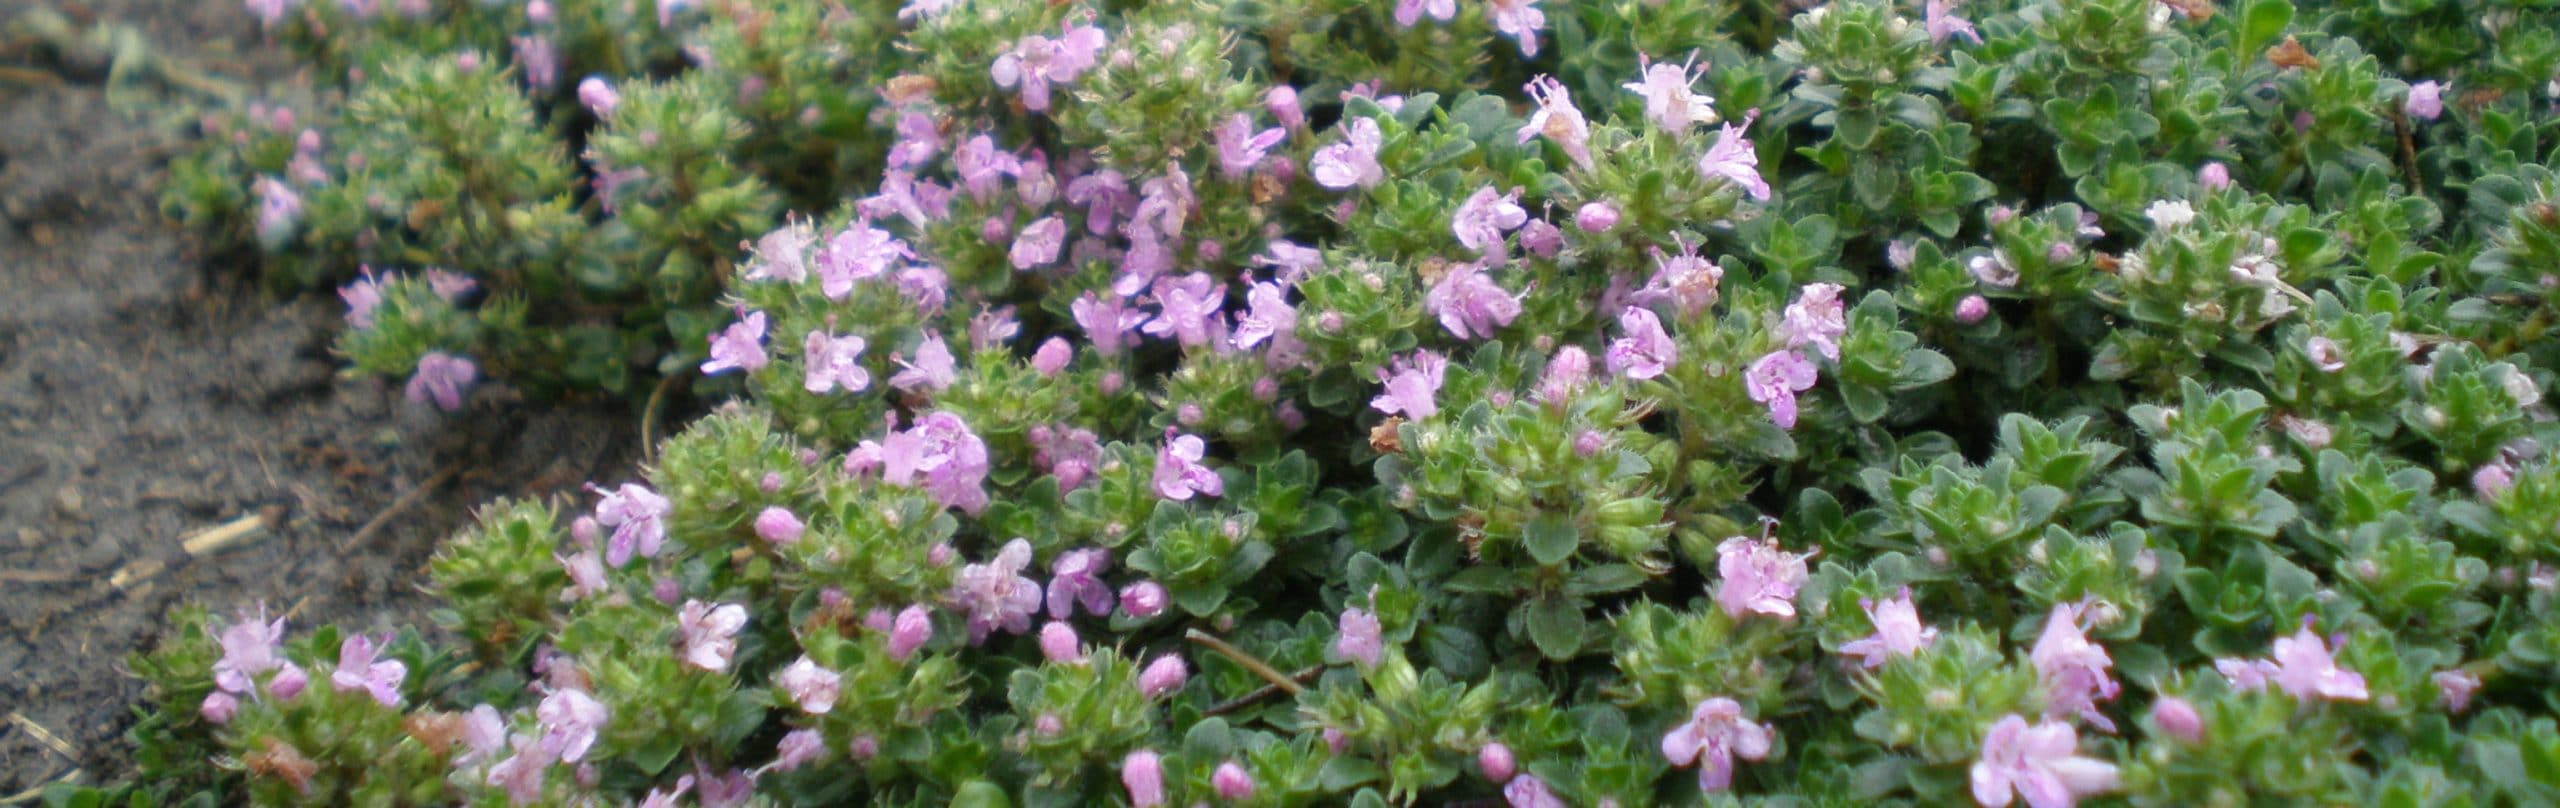 thyme herb wanaka lavender